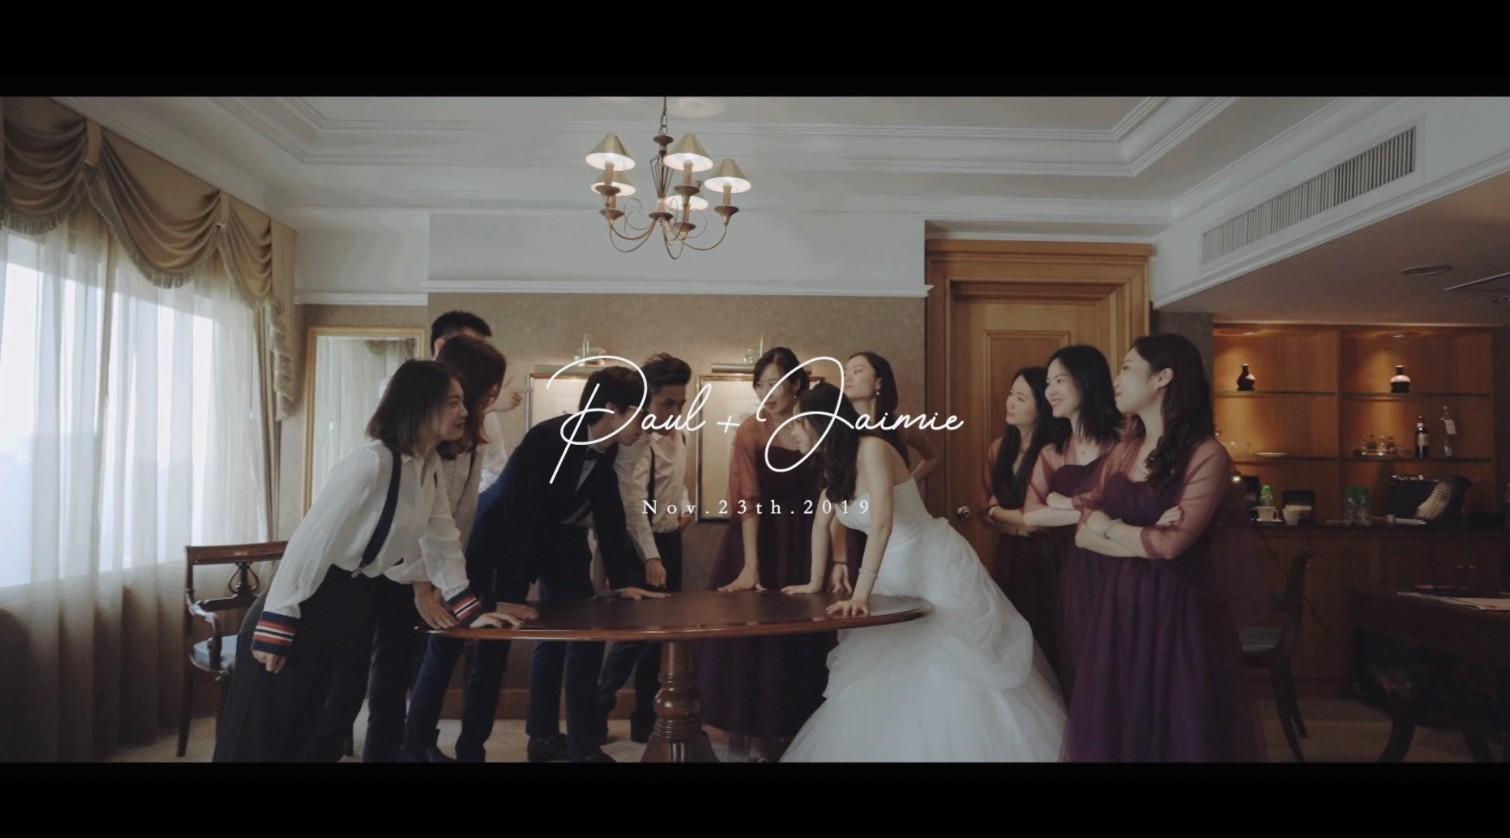 Paul & Jaimie WeddingFilm | CaptureVision婚礼电影